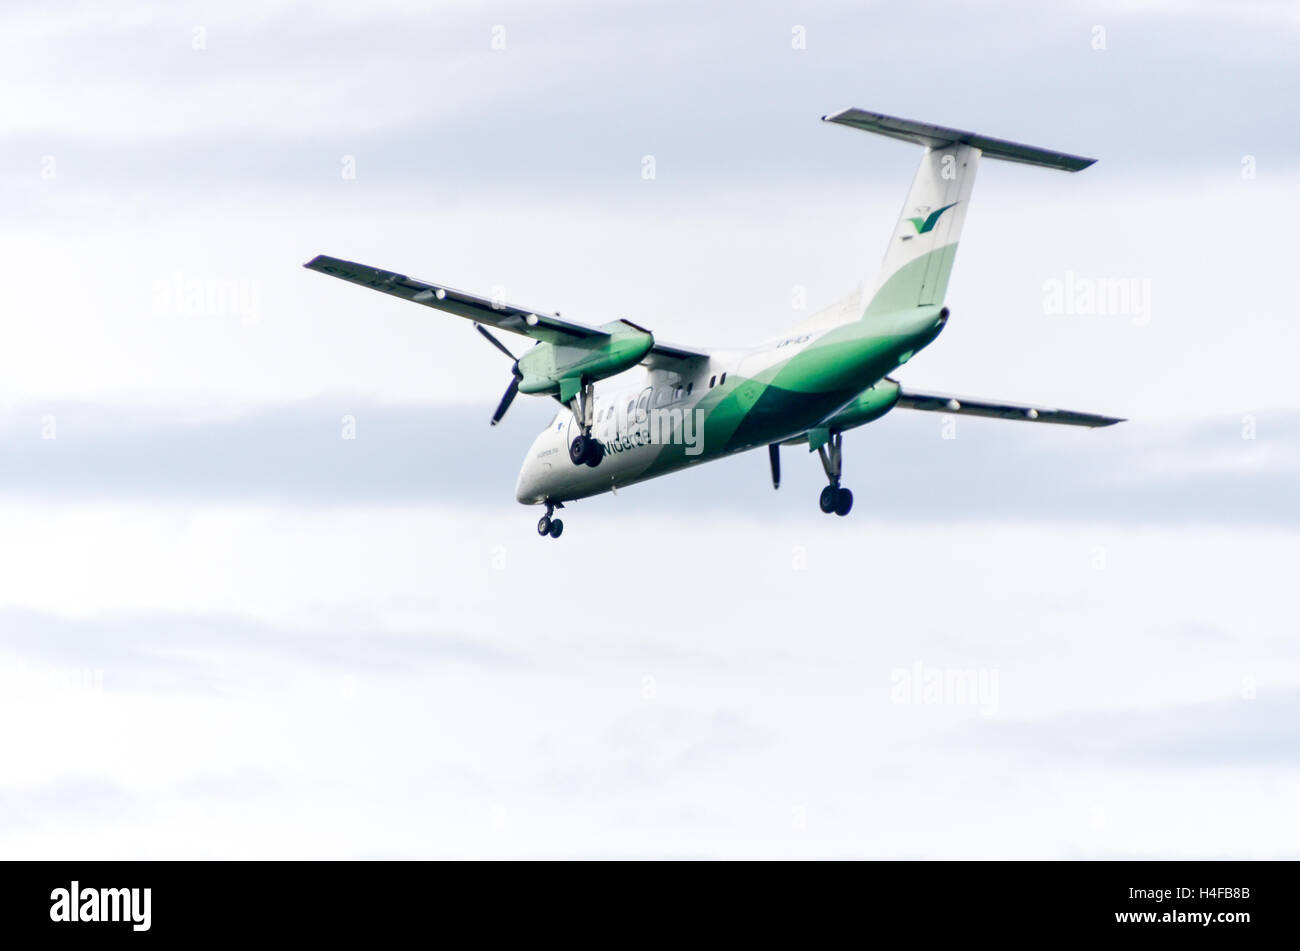 Wideröe Flugzeug (Bombardier Dash 8) Landung in Alta, Norwegen Stockfoto